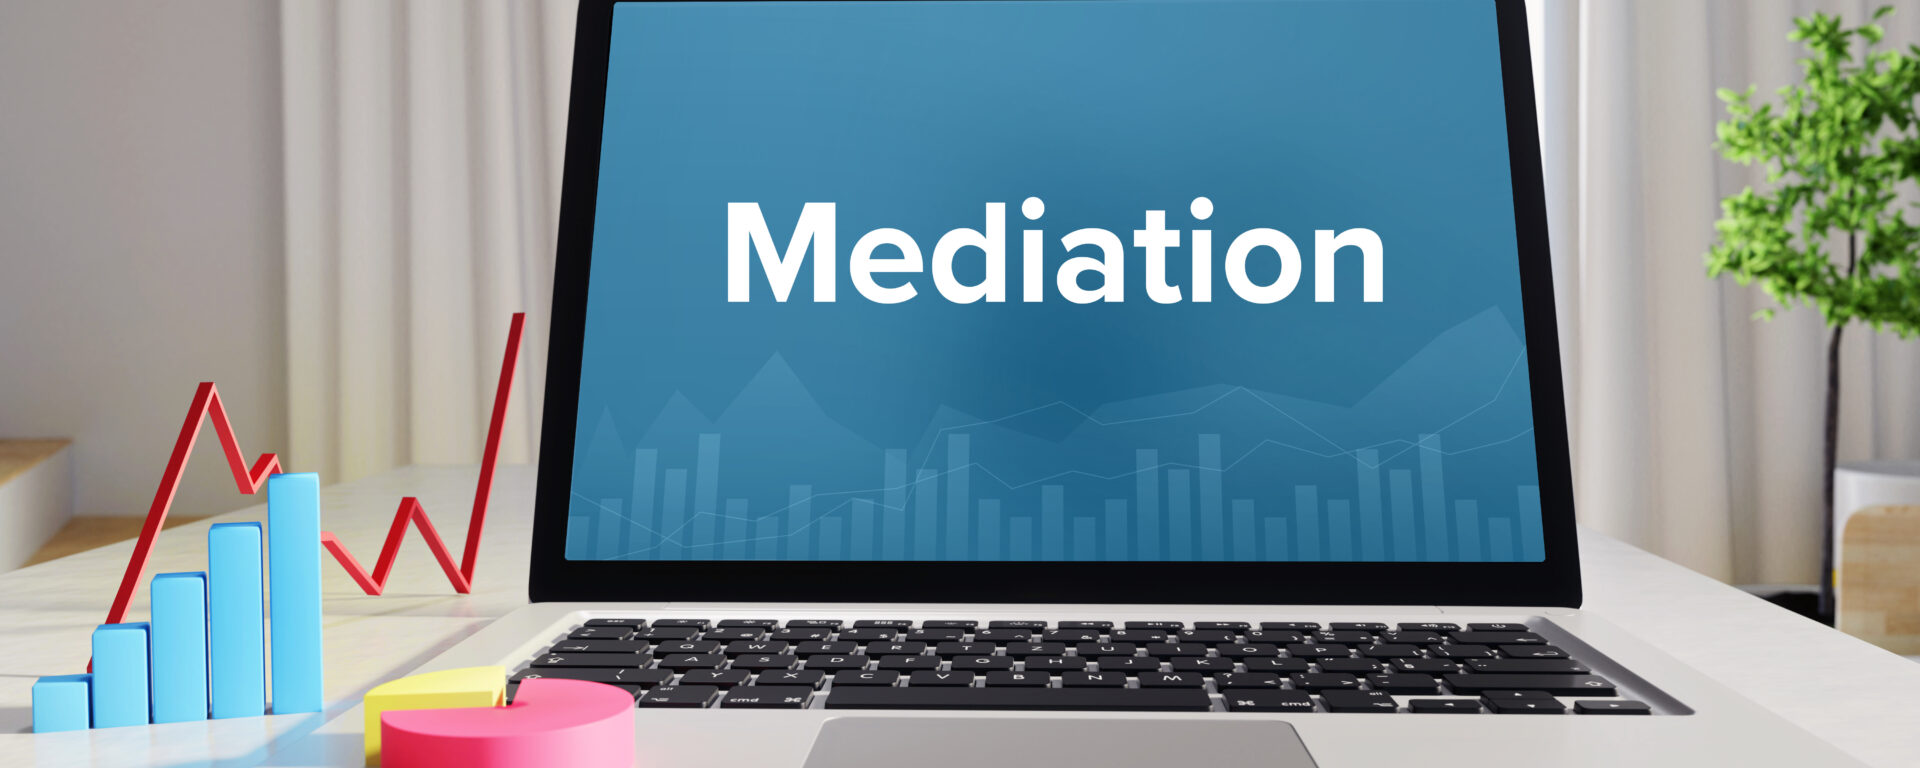 Mediation – Business/Statistik. Laptop im Büro mit Begriff au